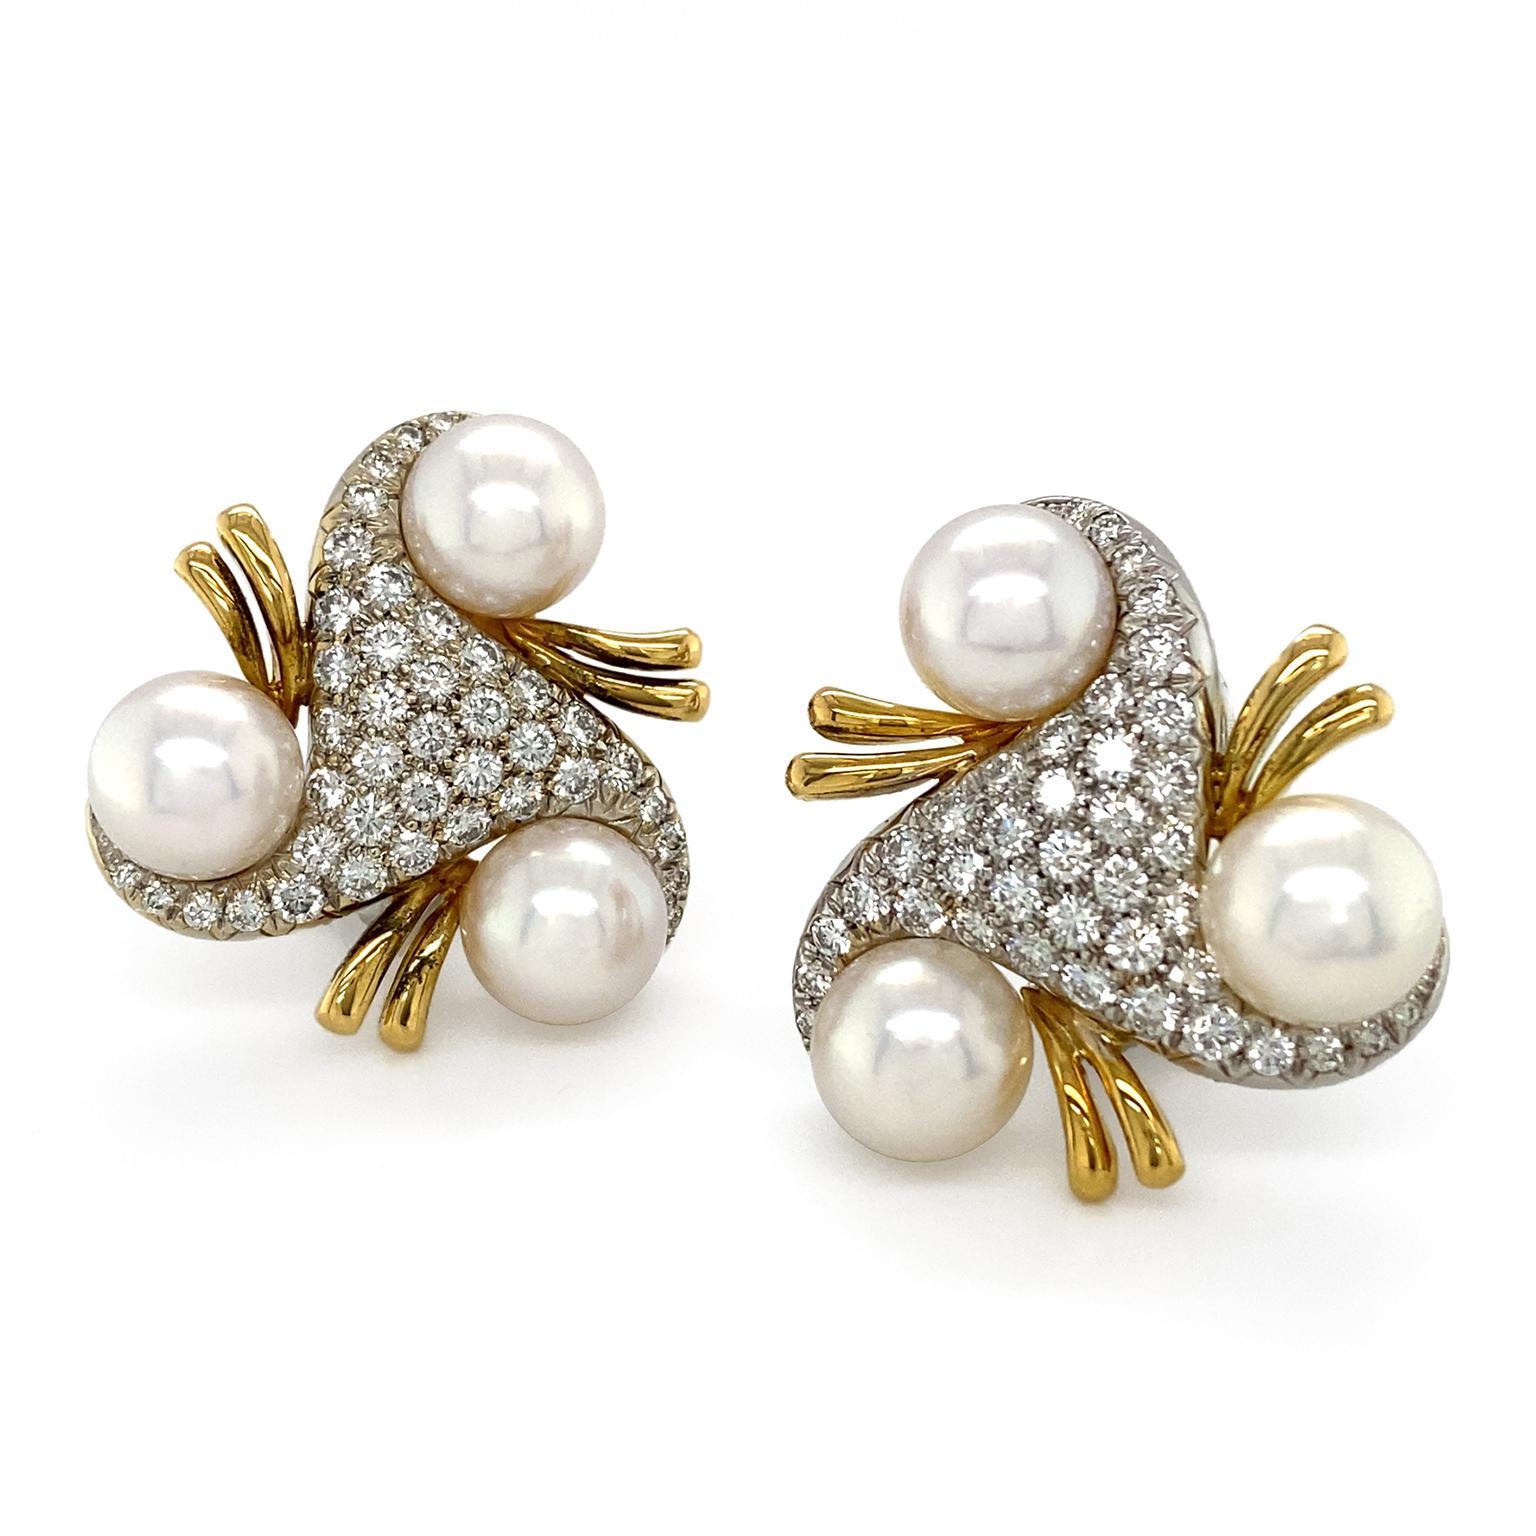 pearl earrings with diamonds around